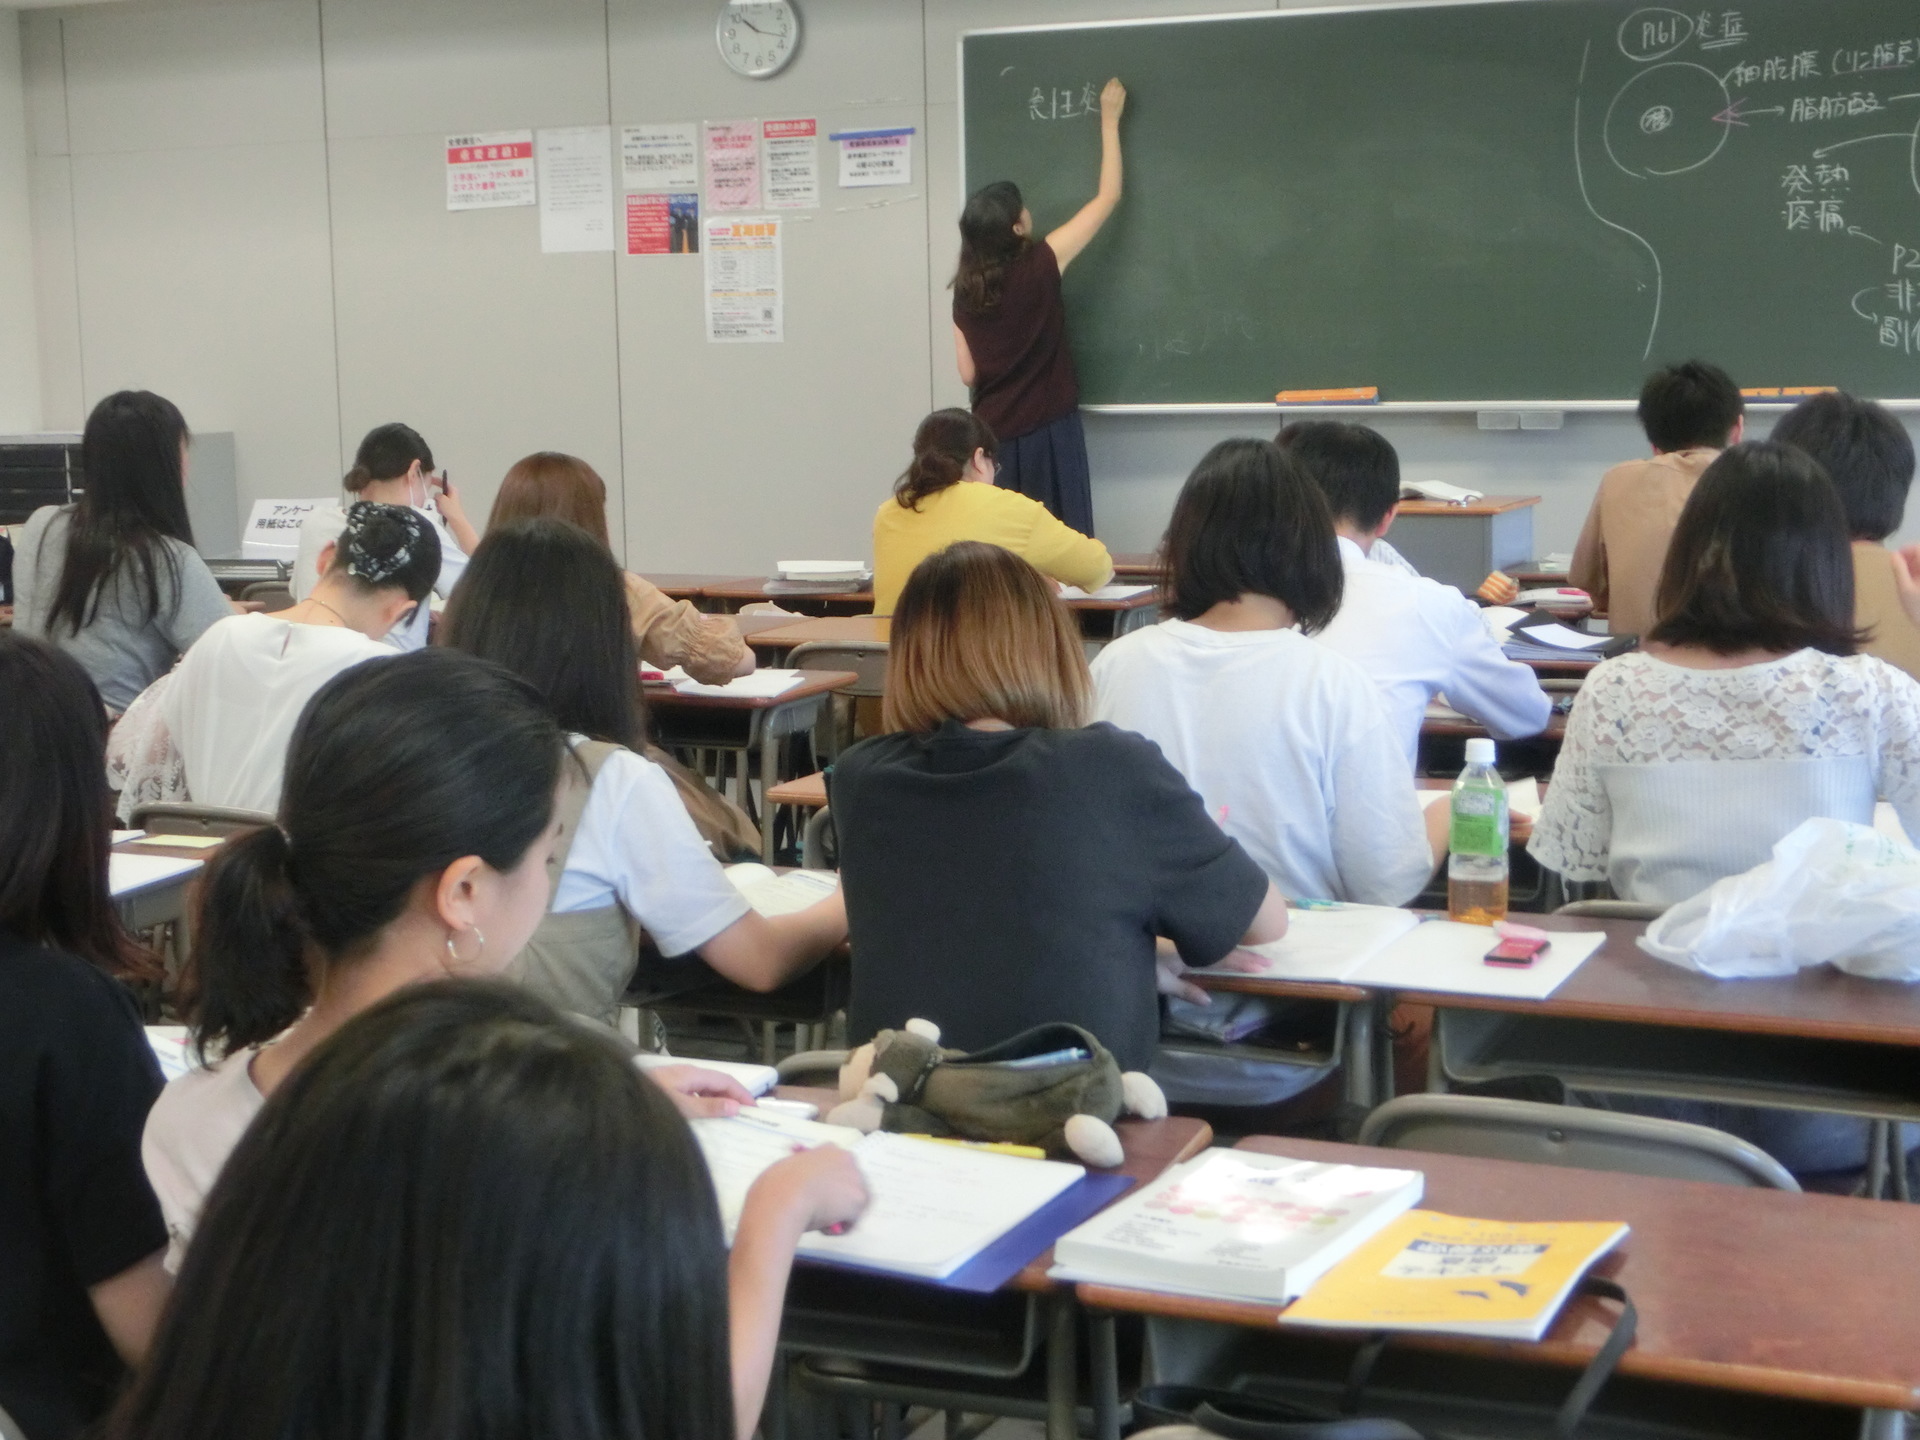 東京アカデミー熊本校 教員採用試験 看護師国家試験 公務員試験 のブログ